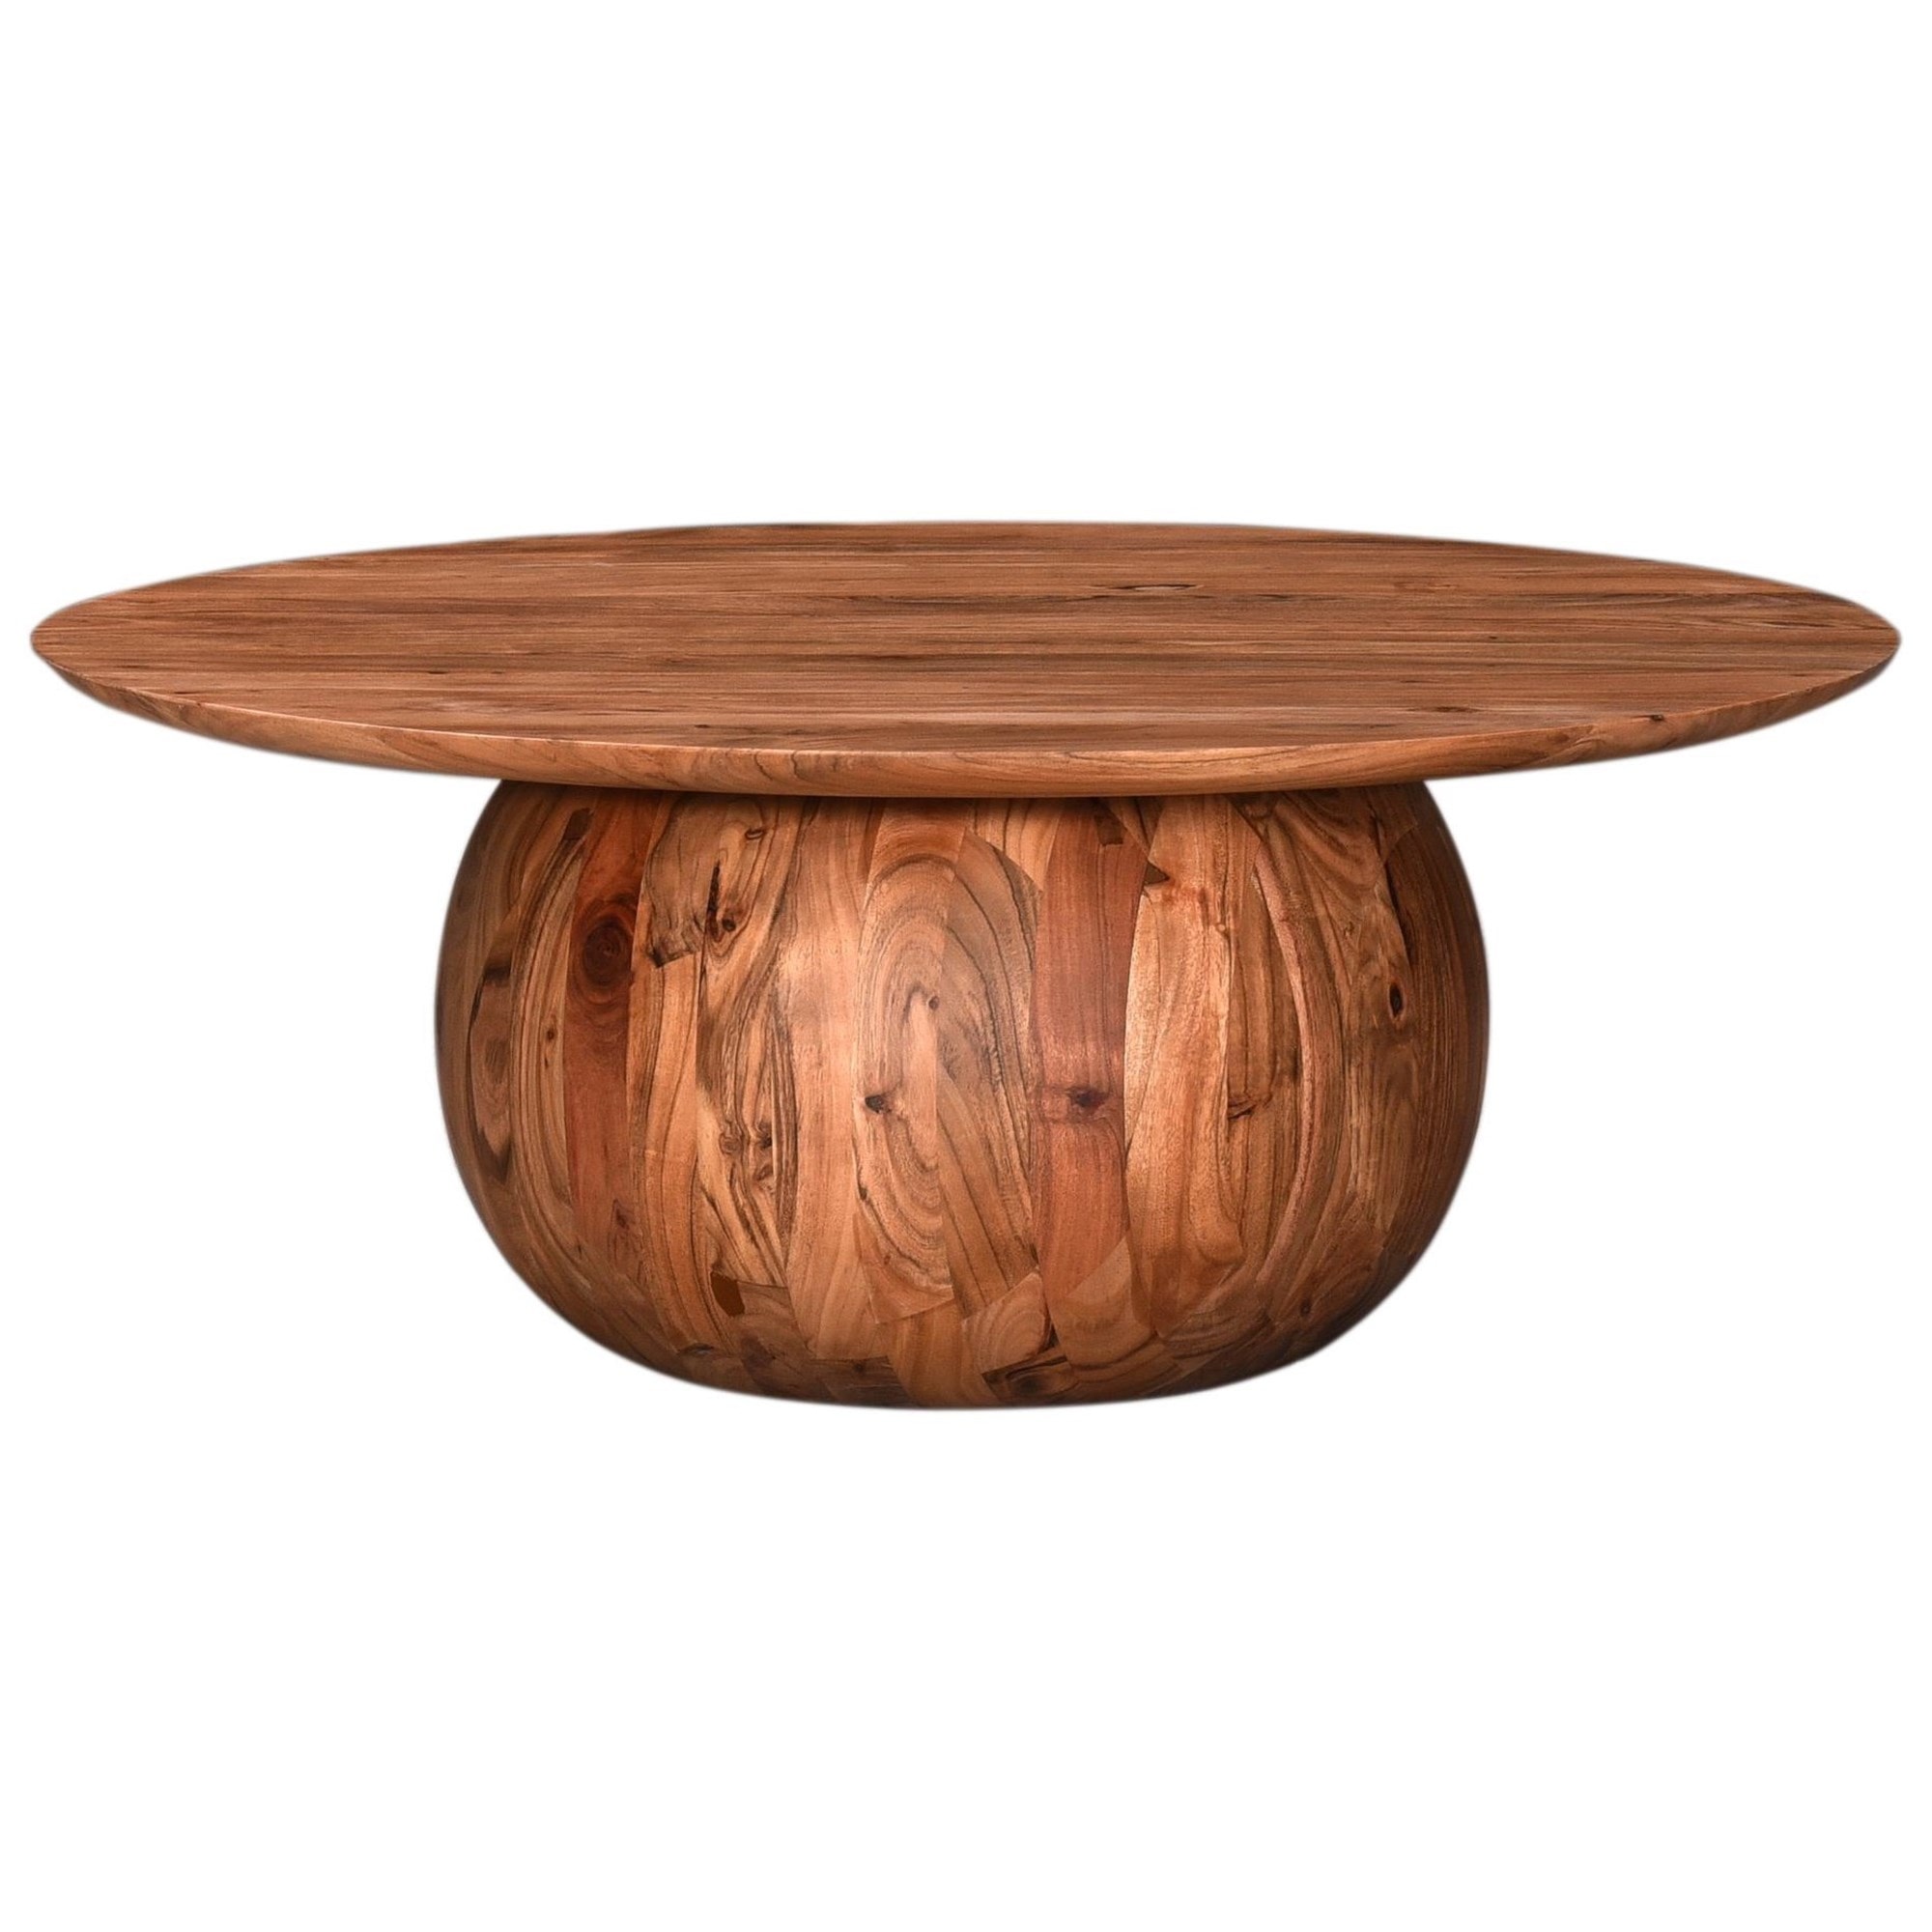 Wood Table with Circular Base